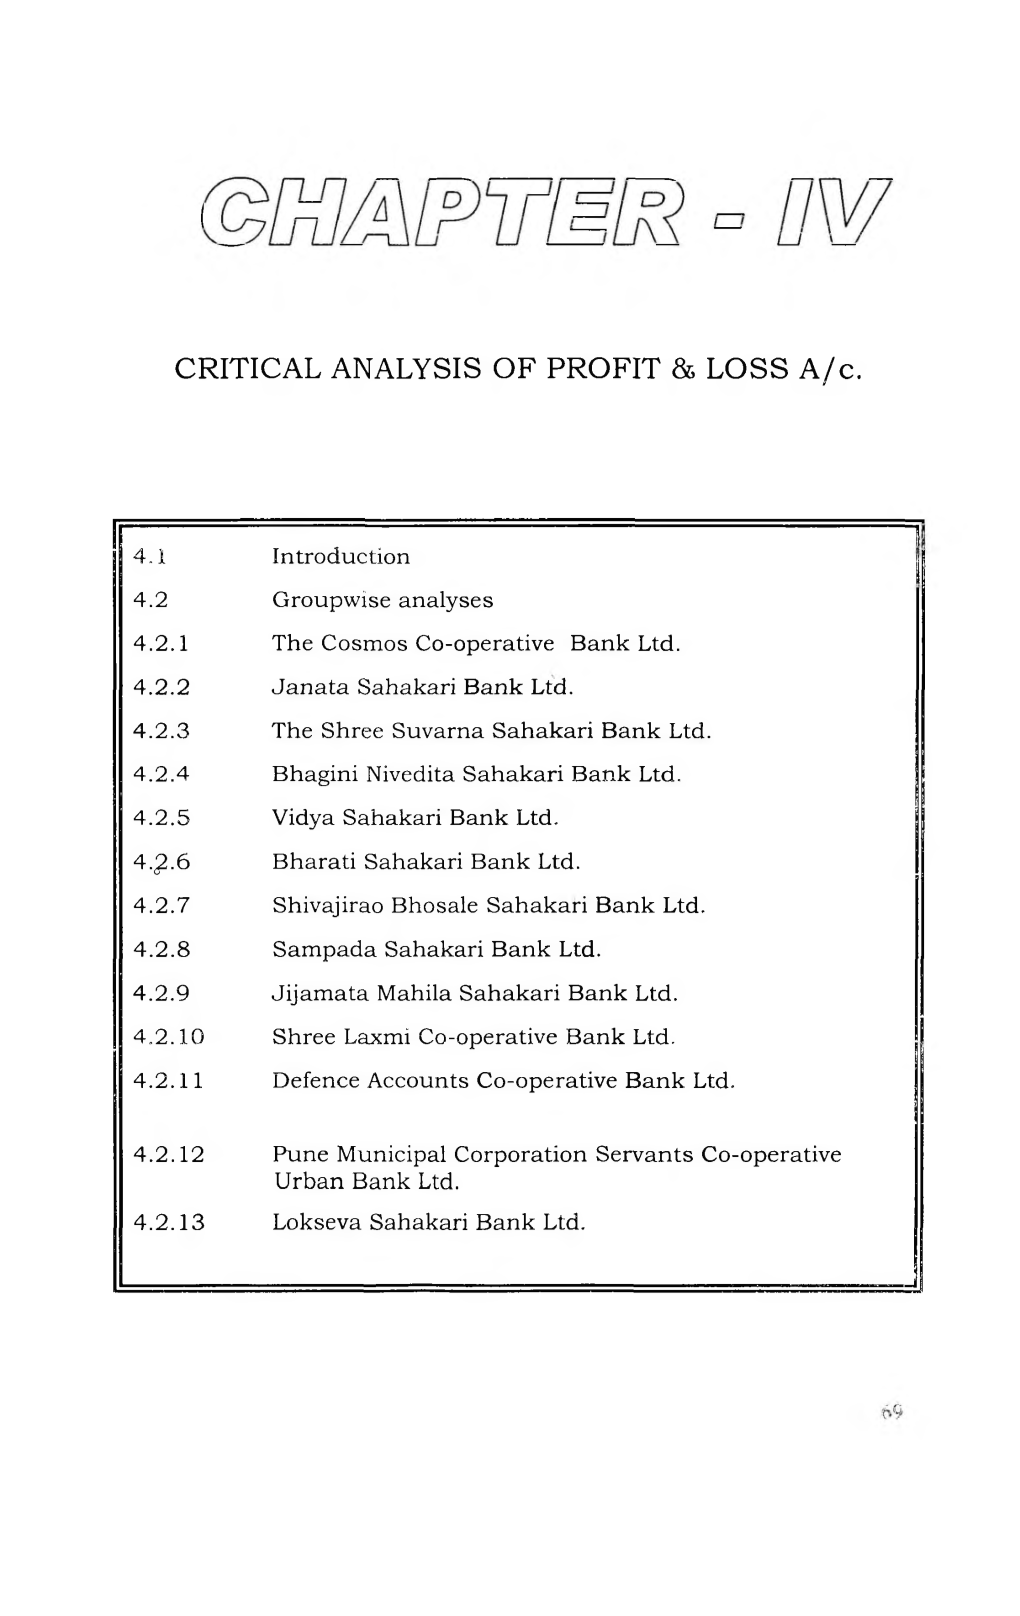 CRITICAL ANALYSIS of PROFIT & LOSS A/C